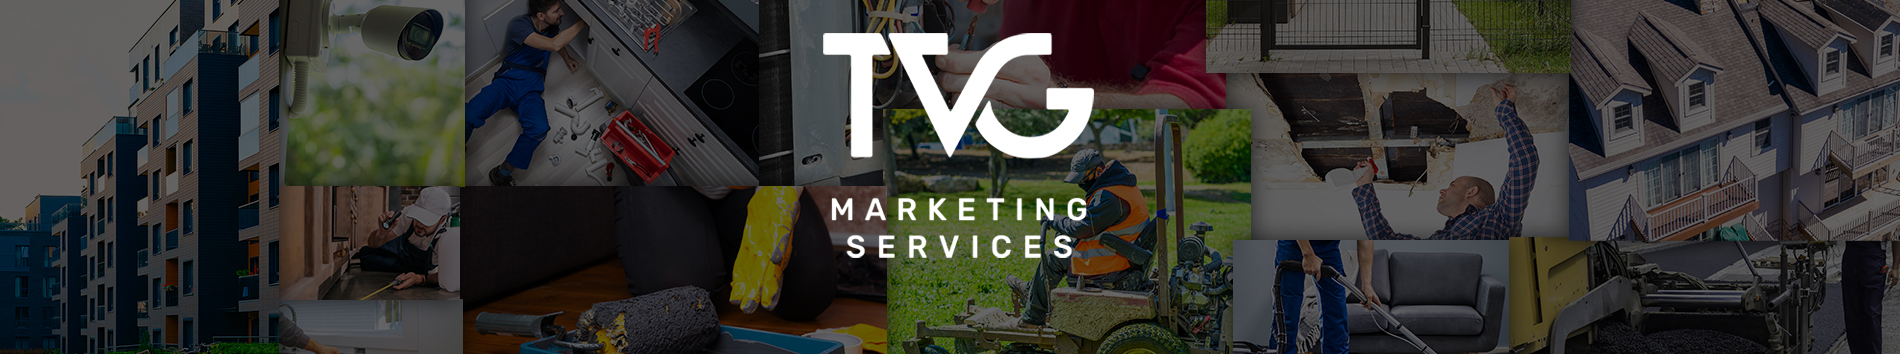 TVG Marketing Services